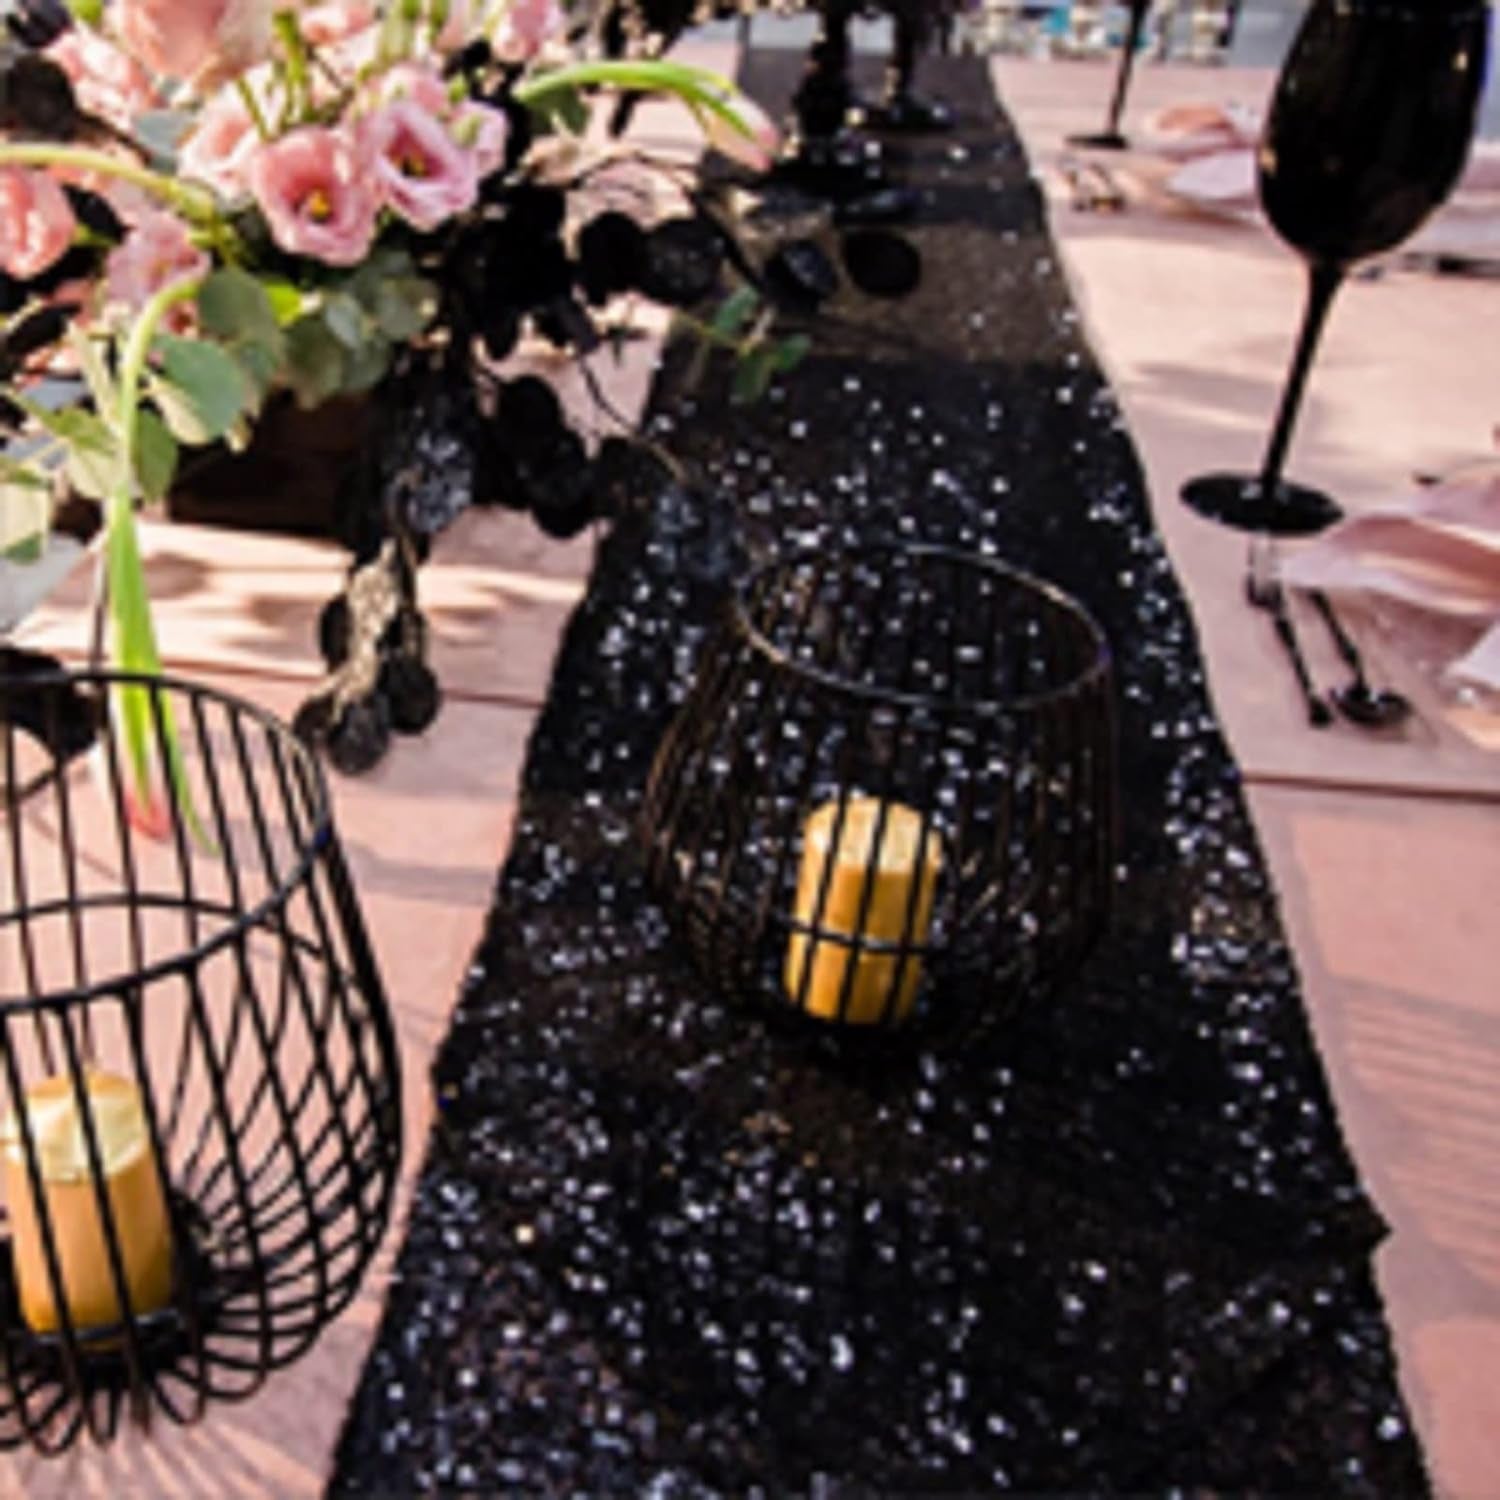 Sparkly Black Sequin Table Runner 12" x 72" - Glamorous Glitter Table Linens for Weddings & Birthday Party Decor